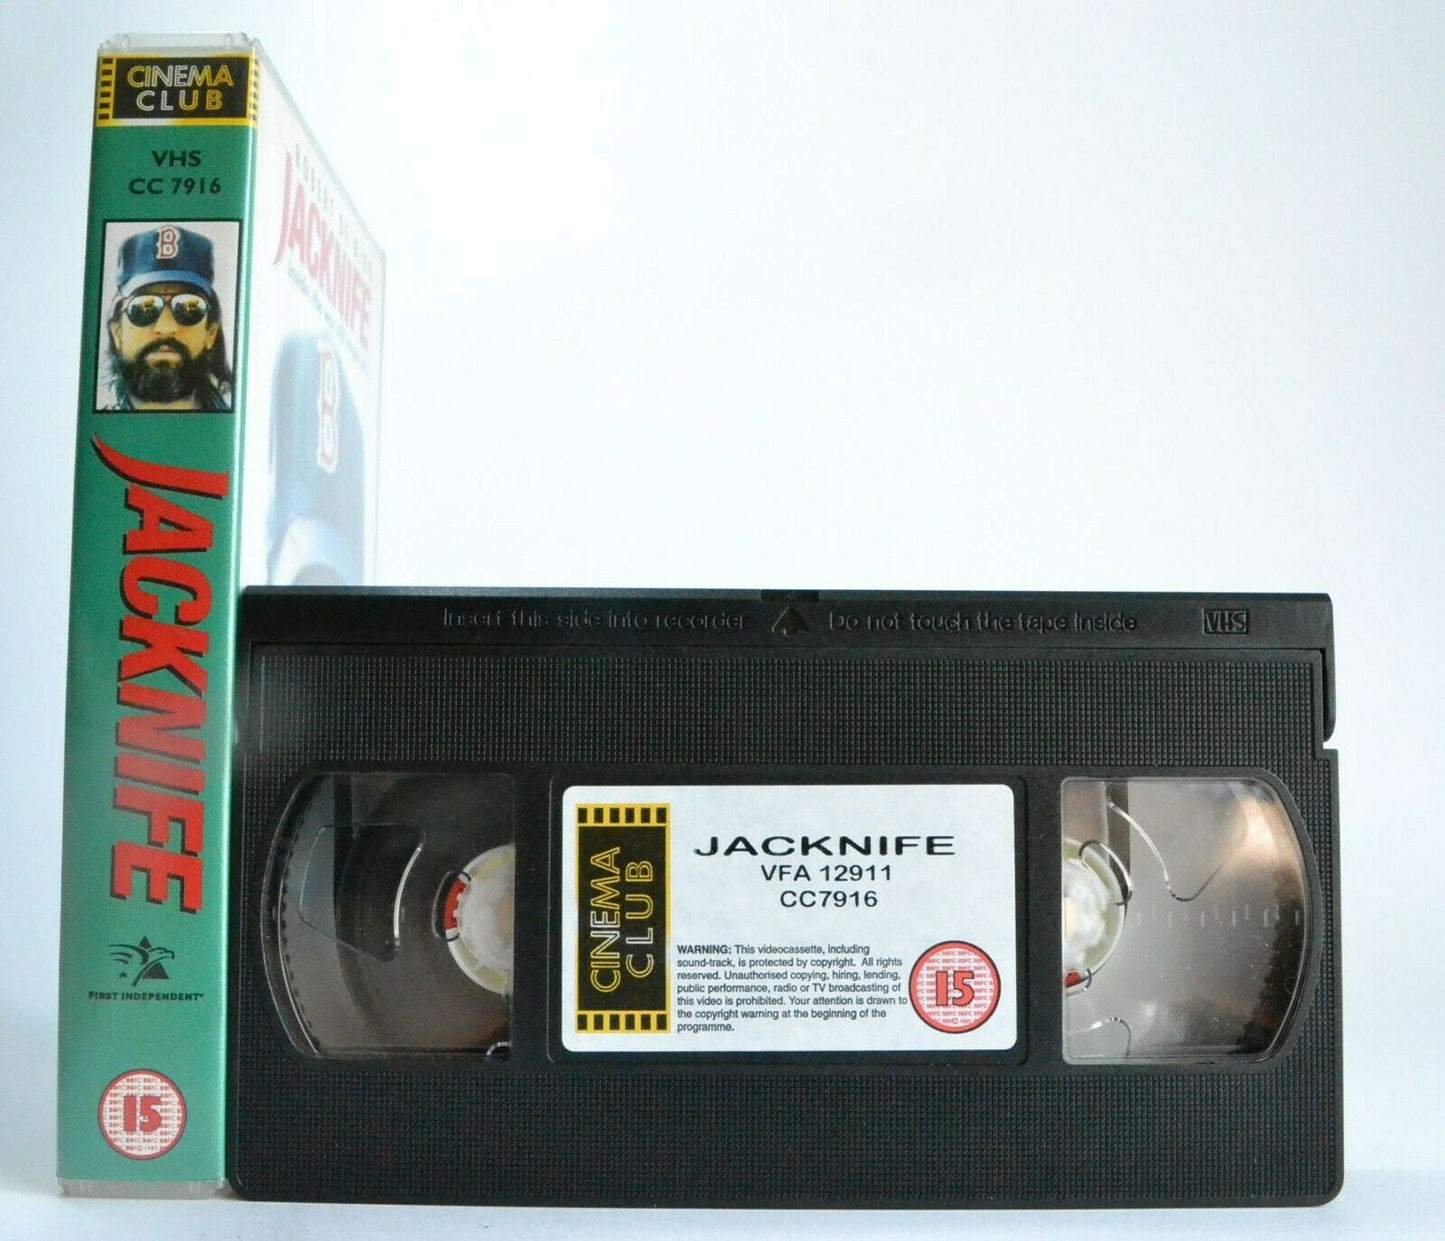 Jacknife: Strange Snow - Serious Story - Ed Harris/Robert De Niro (1989) - VHS-